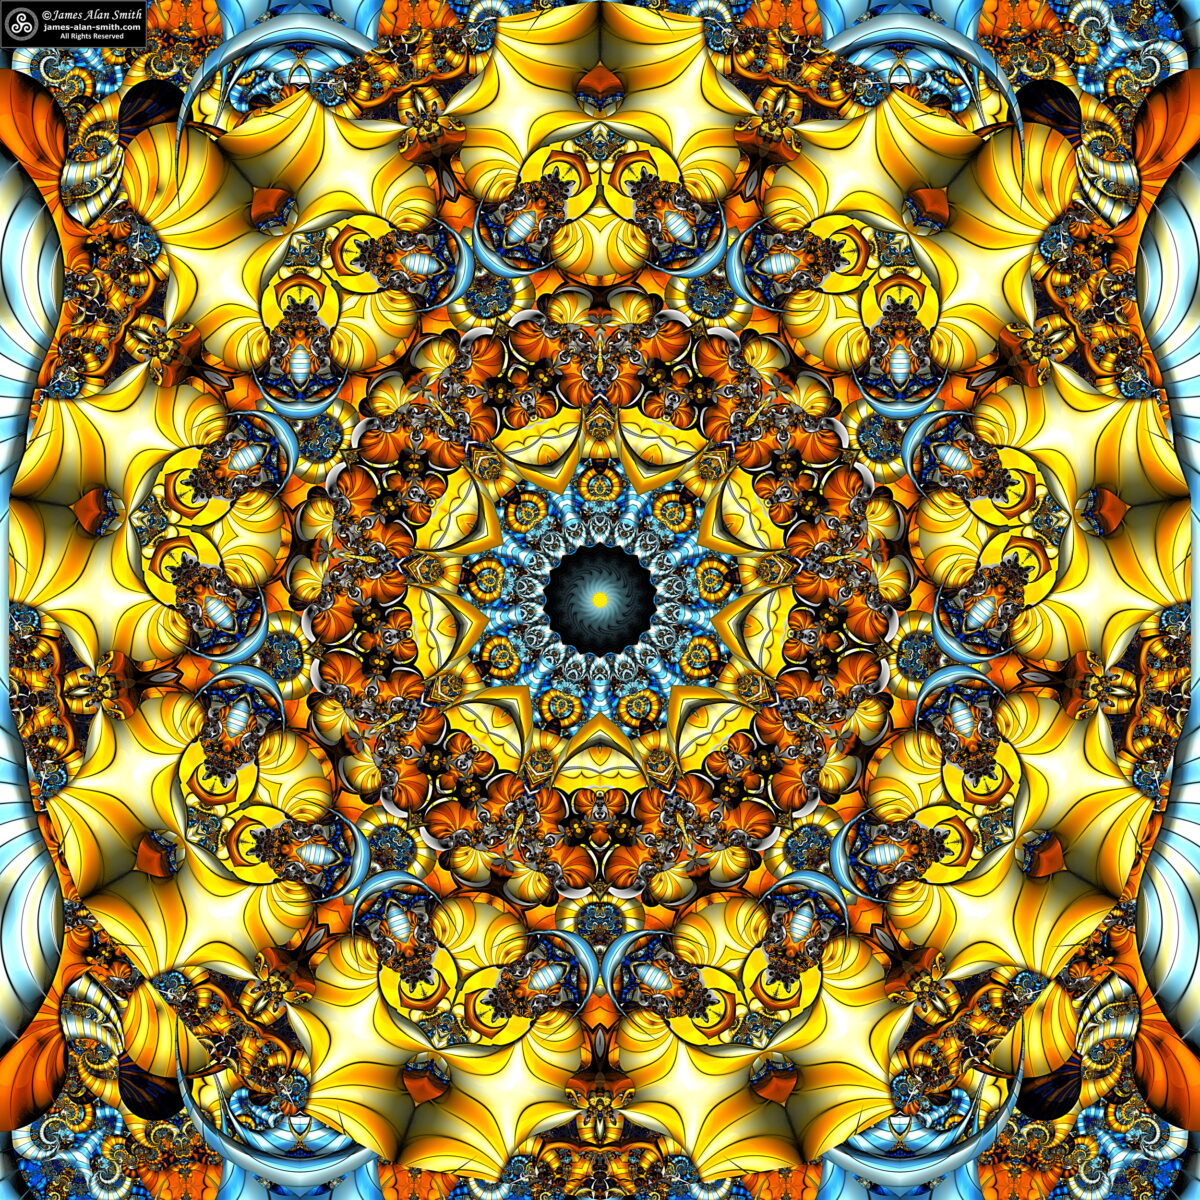 Unusual Mandala Series #070121: Artwork by James Alan Smith